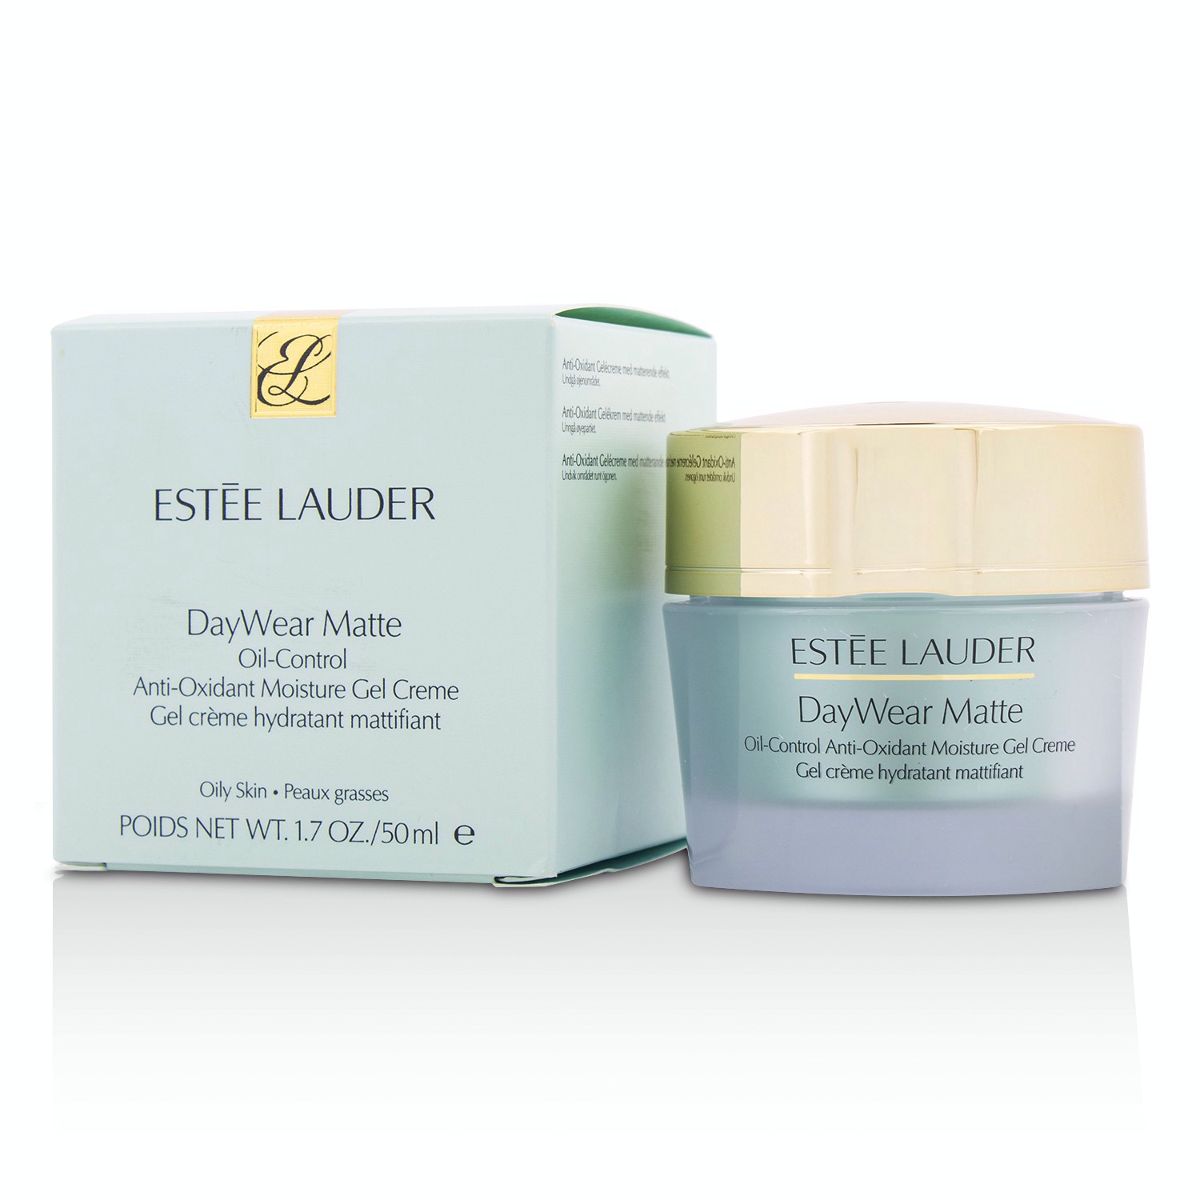 DayWear Matte Oil-Control Anti-Oxidant Moisture Gel Creme - Oily Skin Estee Lauder Image